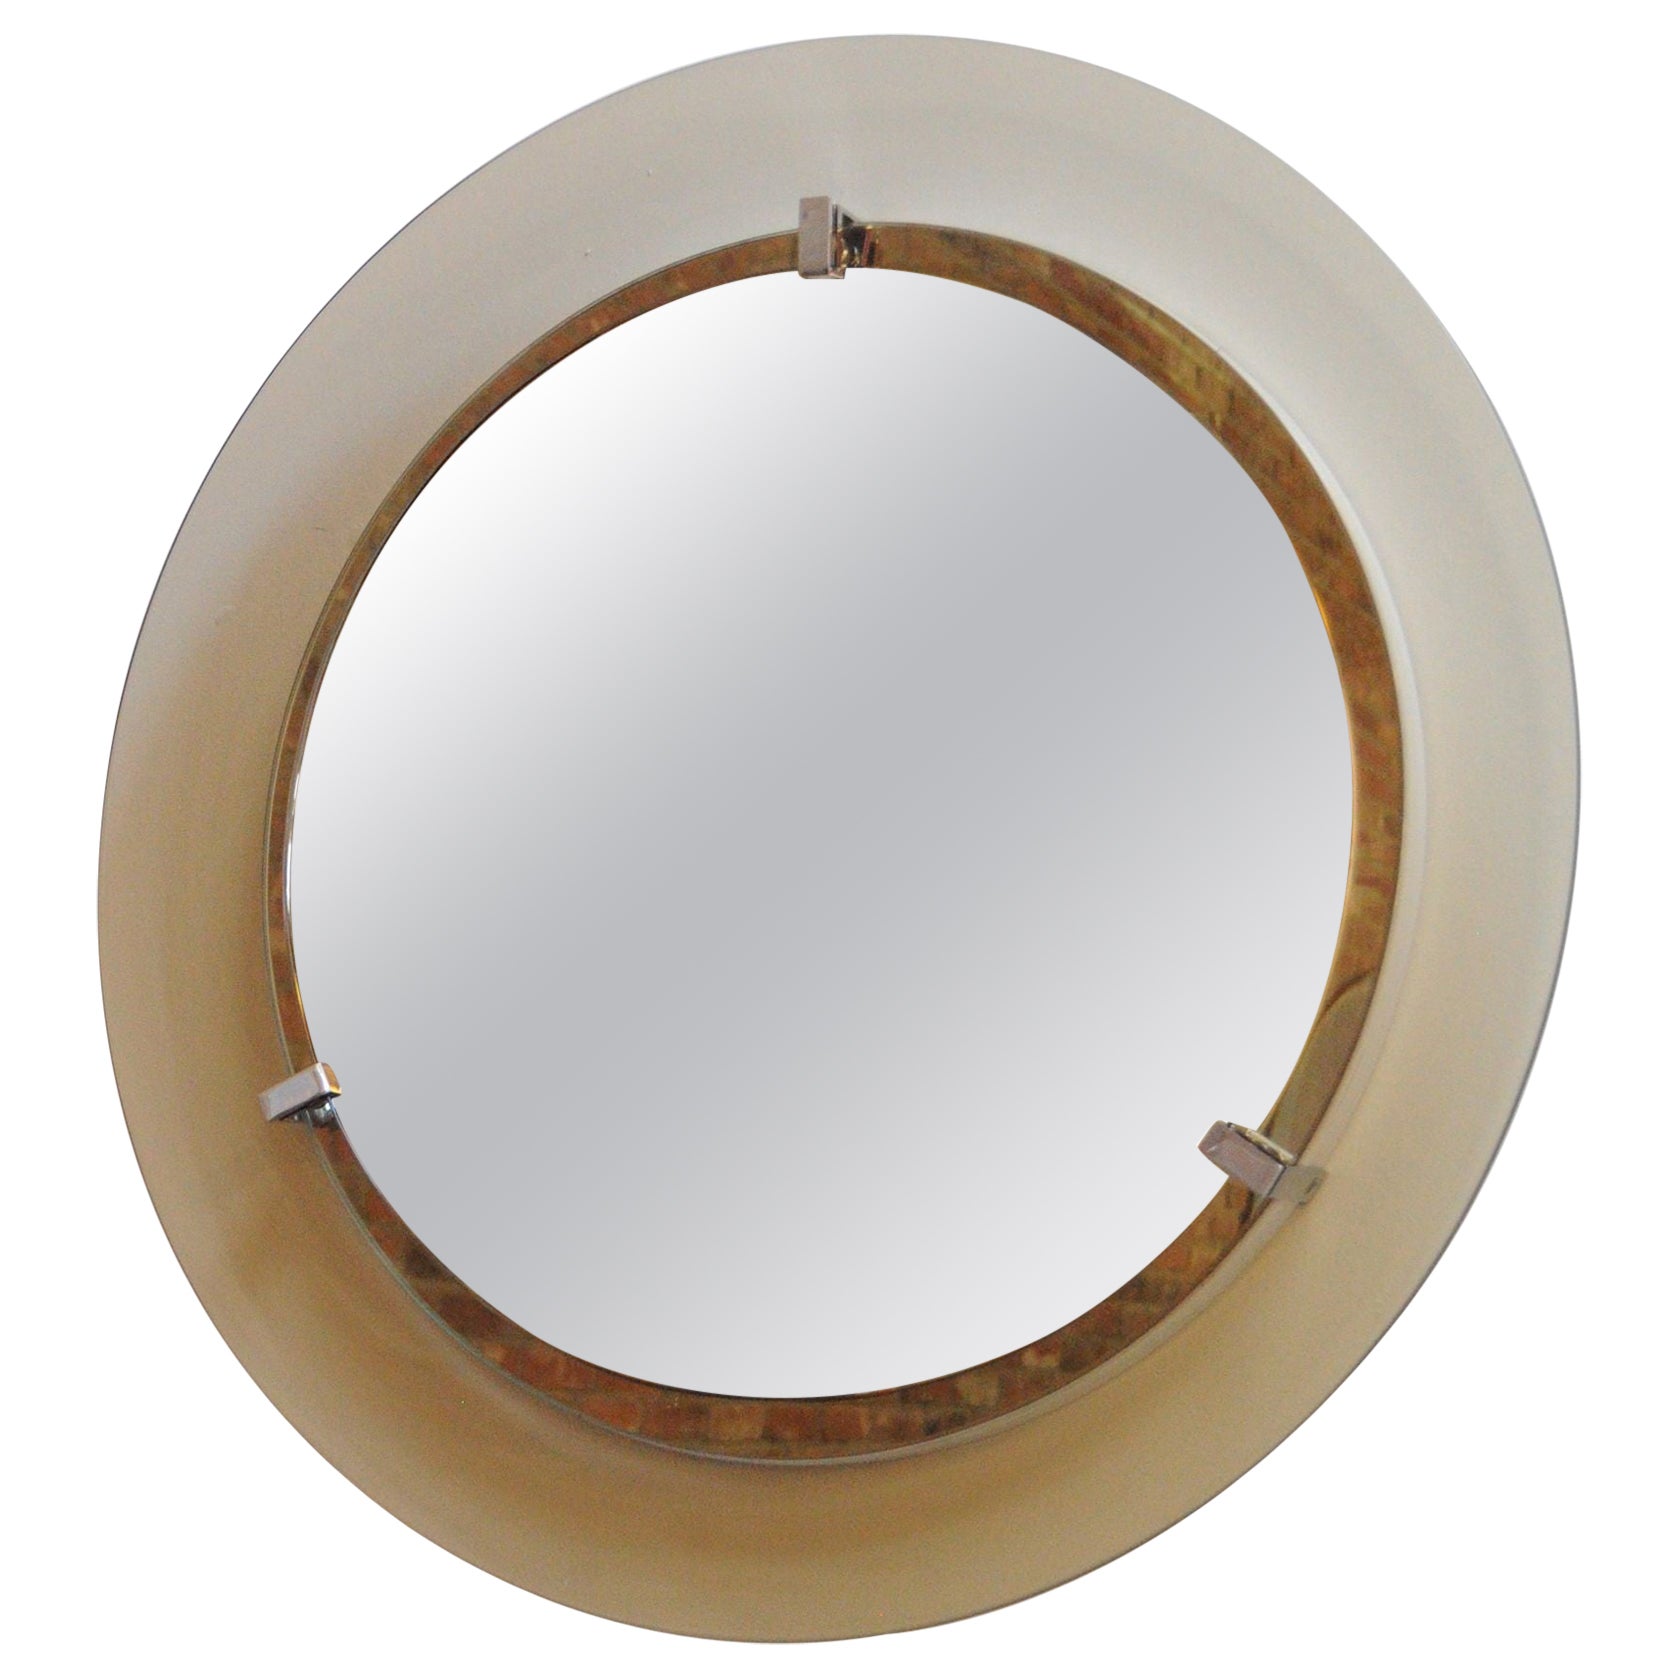 Italian Modernist Smoked Glass Circular Wall Mirror by Veca